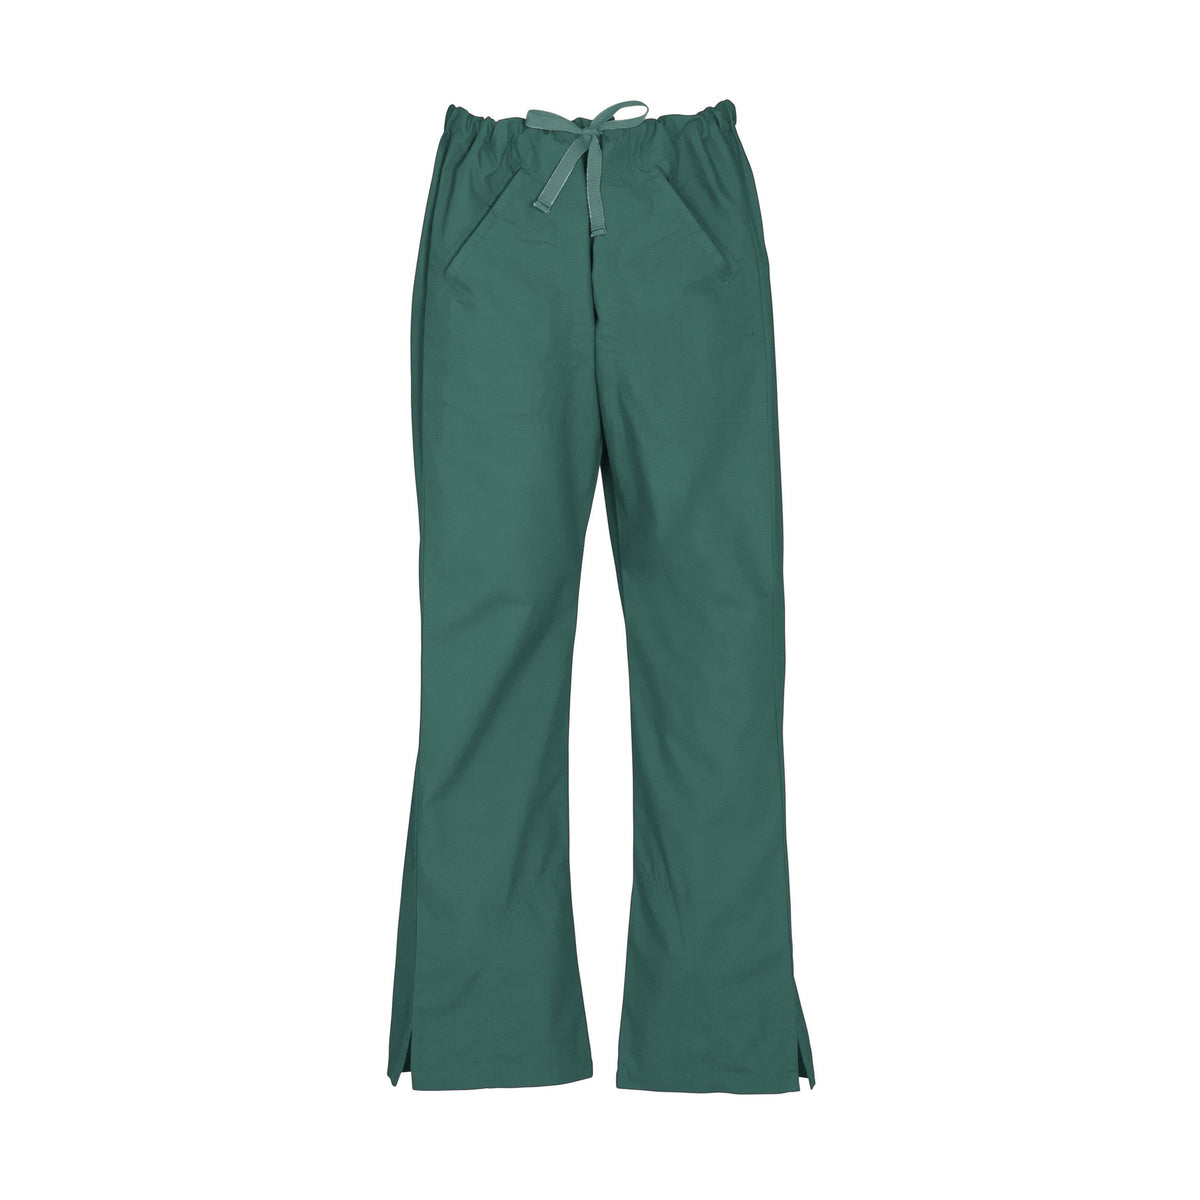 Buy Biz Collection Ladies Classic Scrubs Bootleg Pants - H10620 Online ...